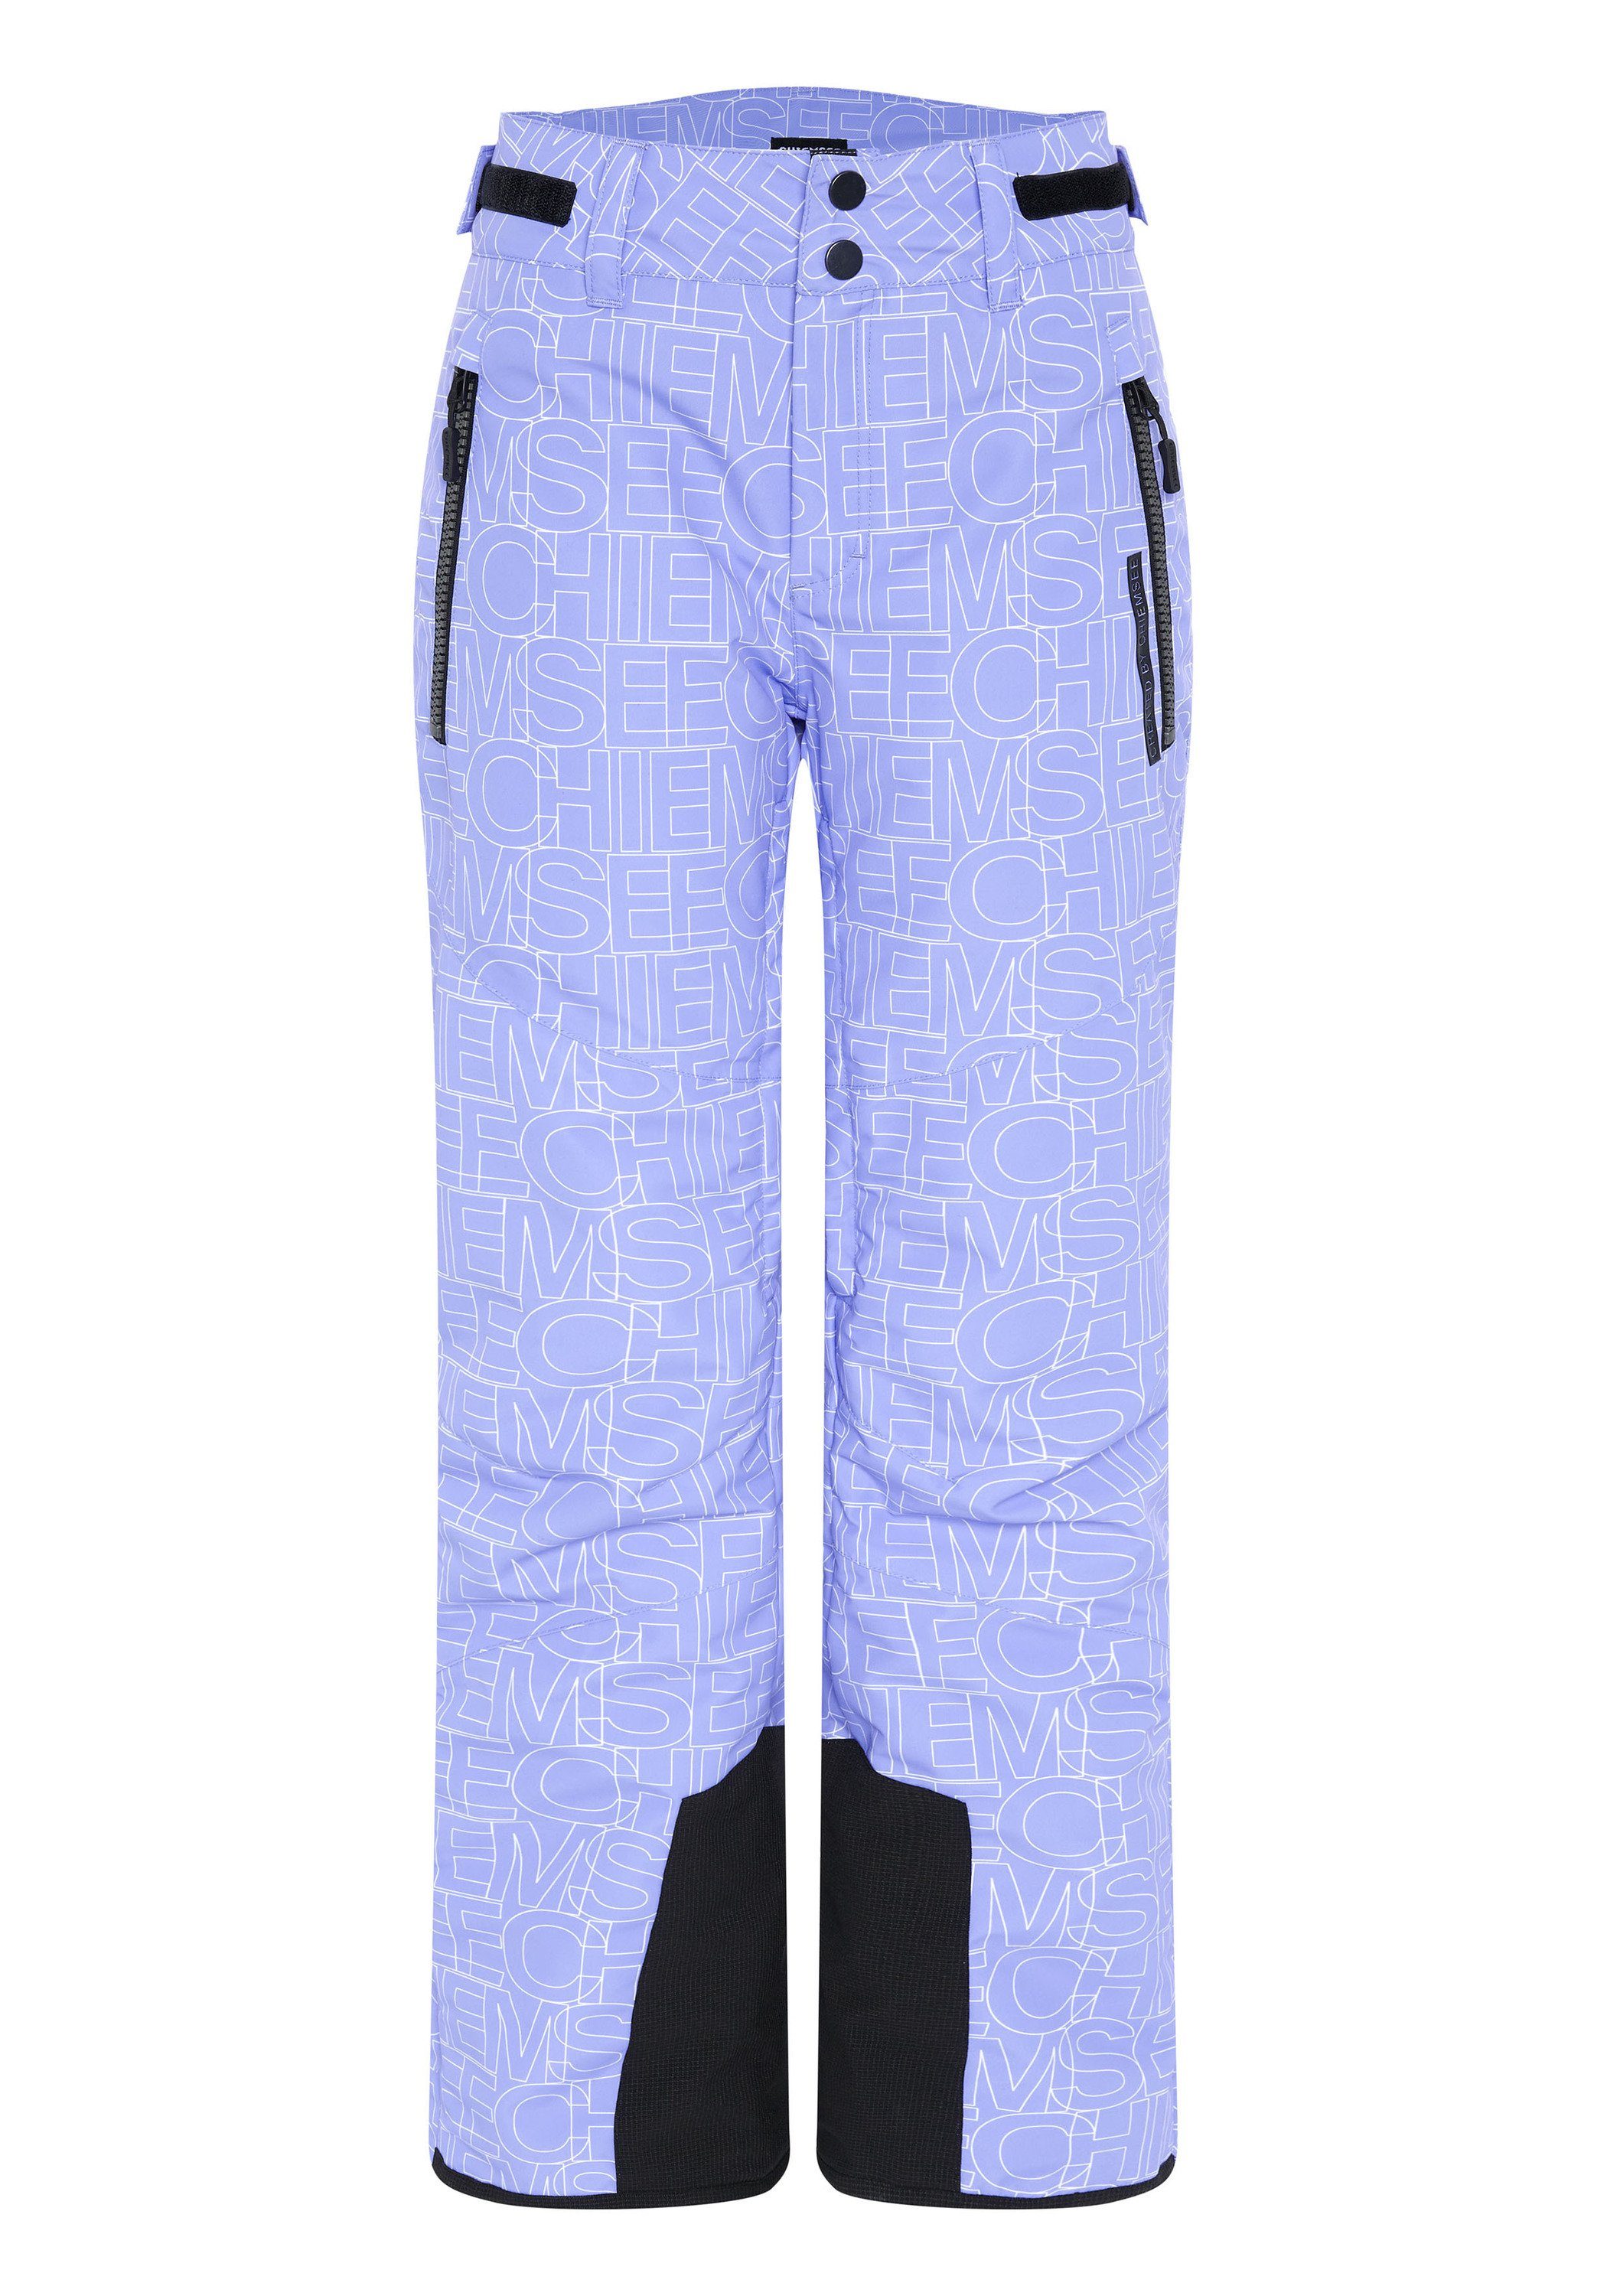 Chiemsee Sporthose Slim-Fit Skihose mit Allover-Muster 1 Medium Blue/White